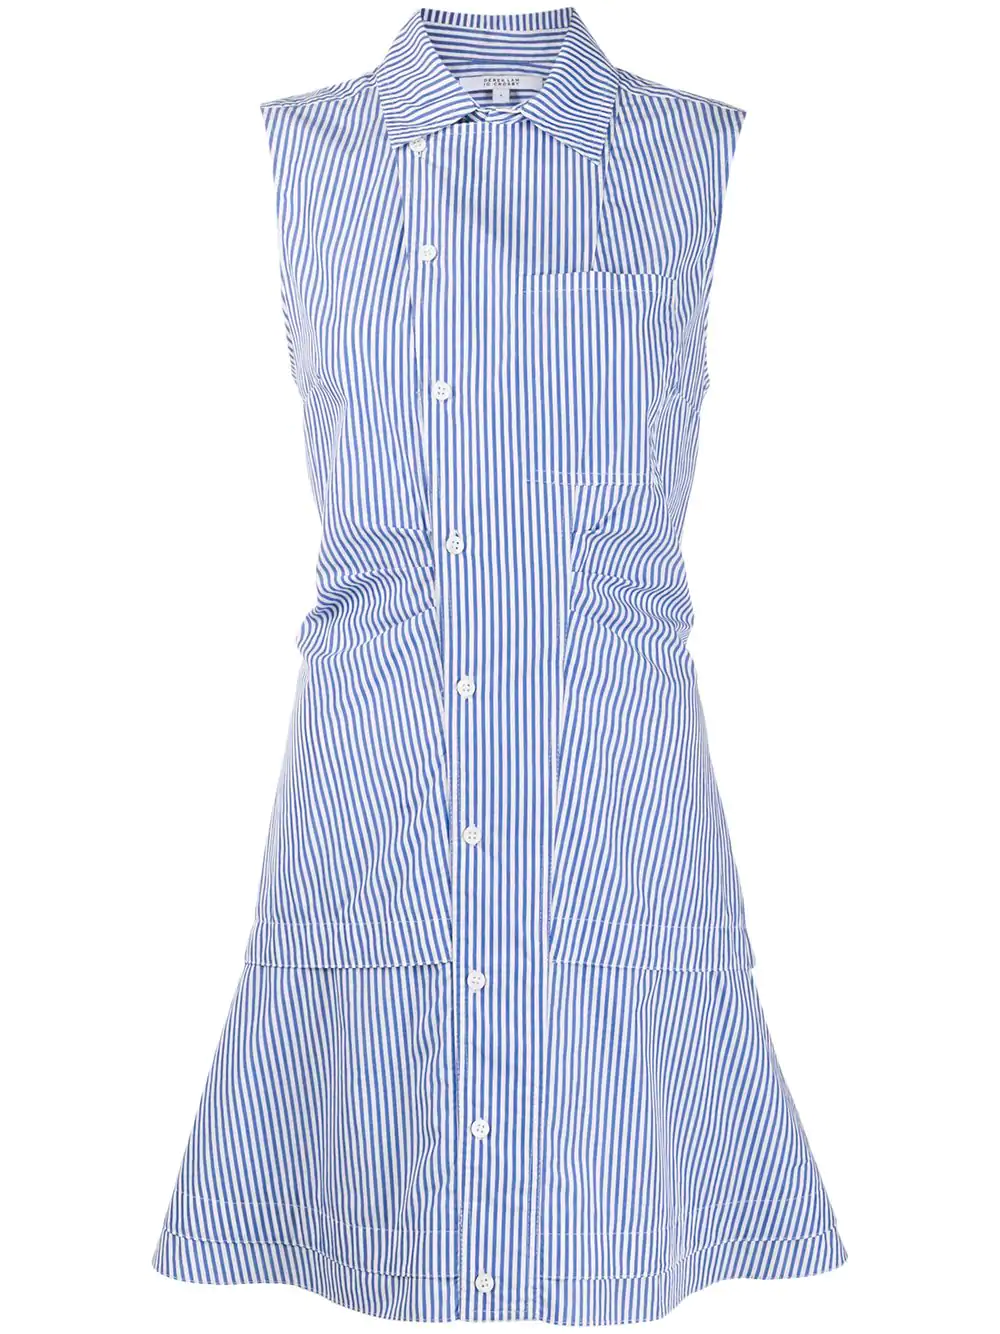 Derek Lam 10 Crosby - Satina Sleeveless Shirt Dress in Blue-White